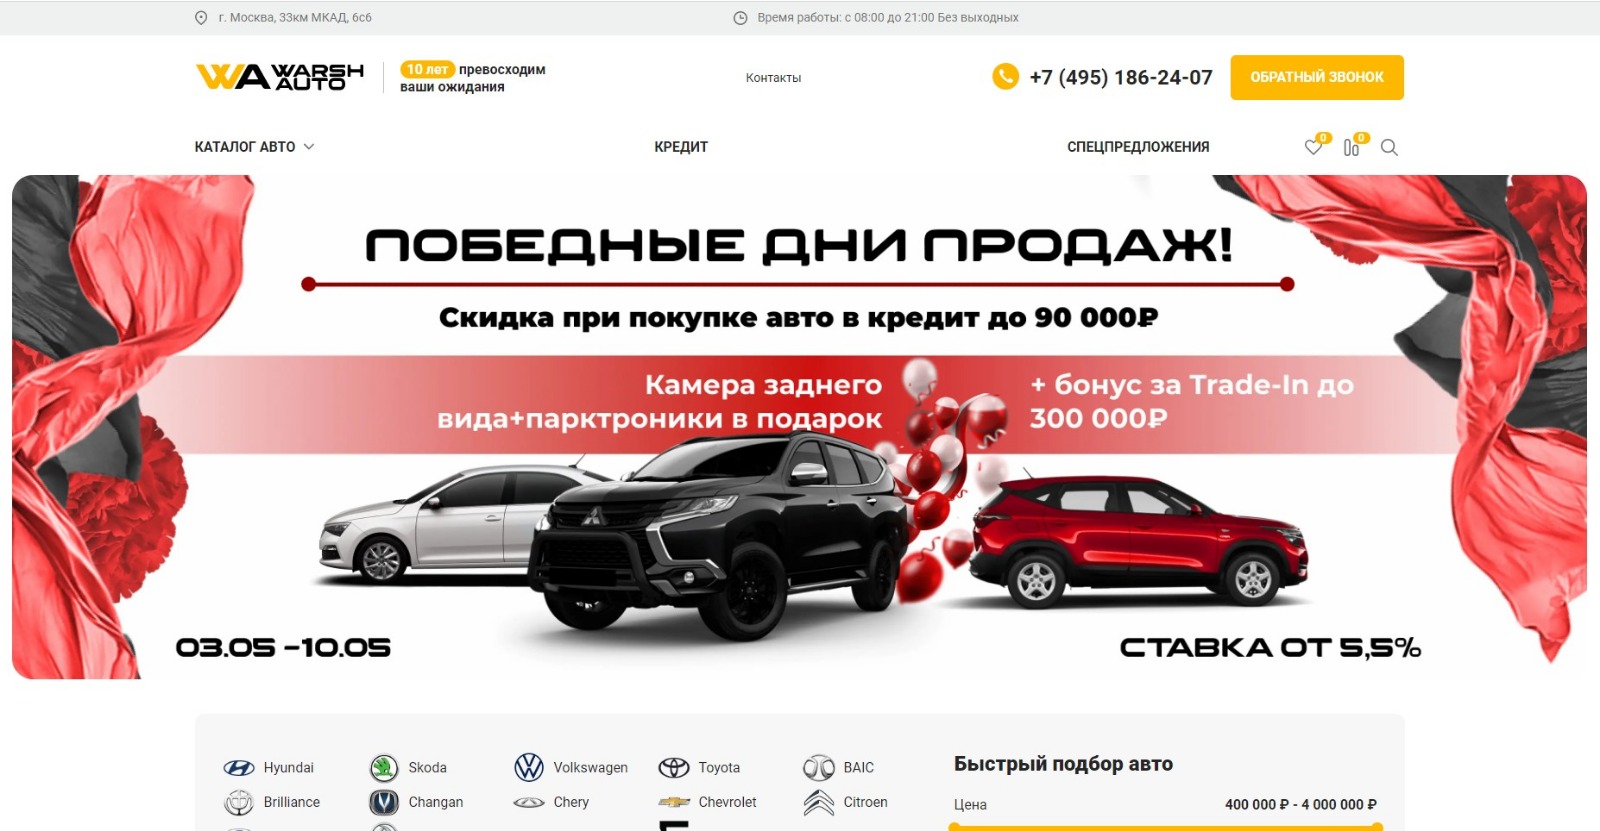 Официальный сайт varsh avto